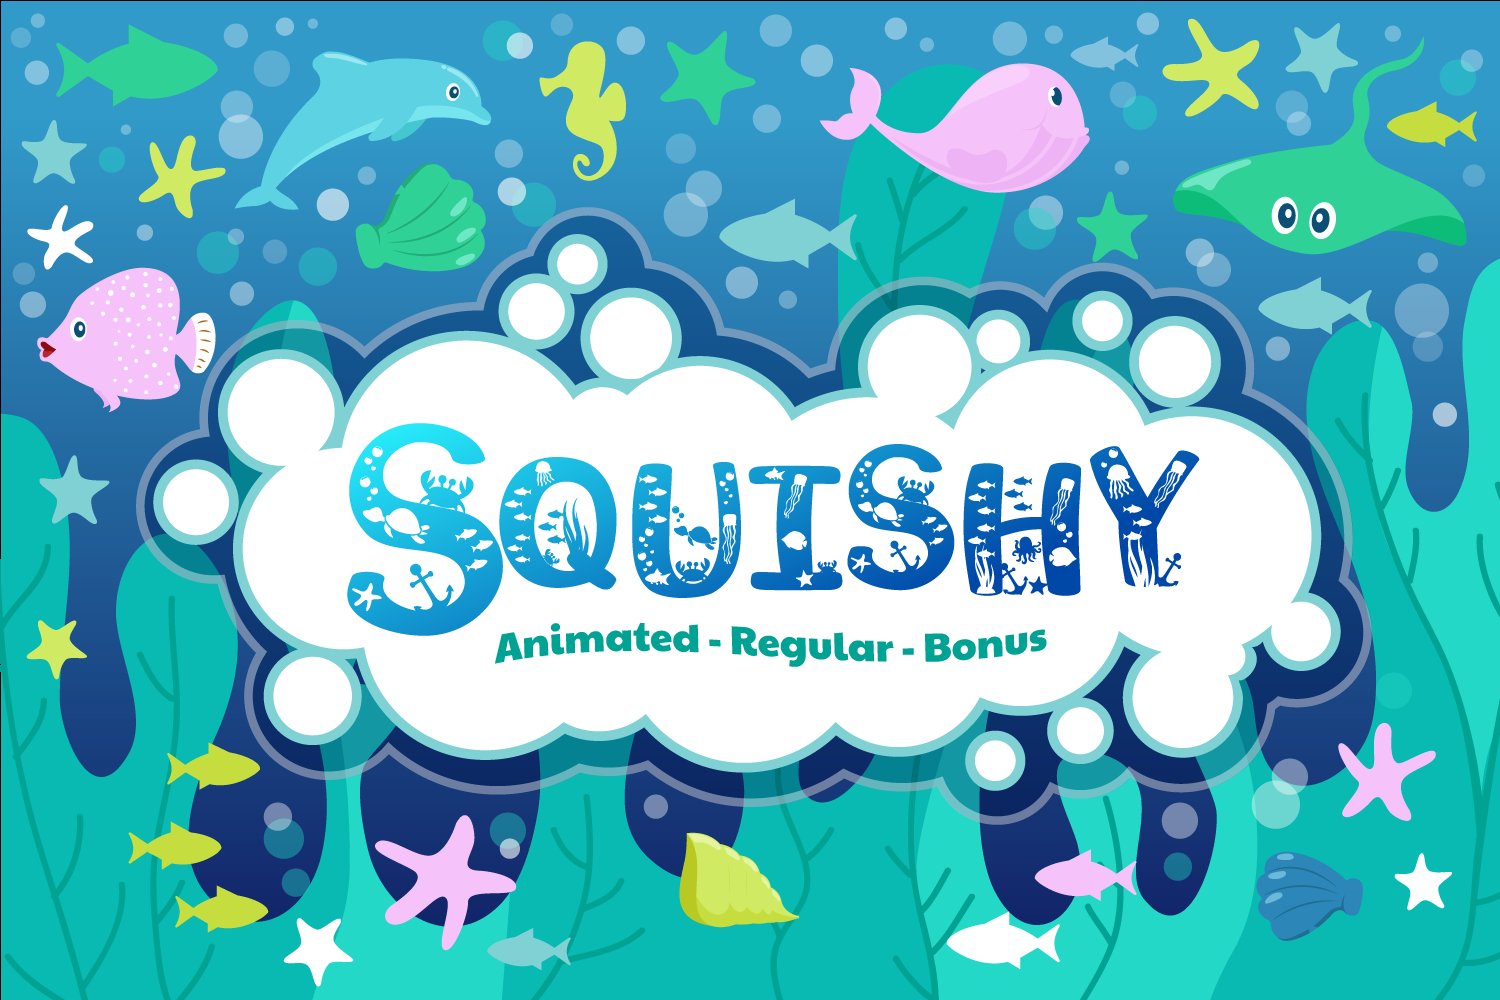 Squishy - A Fun Beach Font cover image.